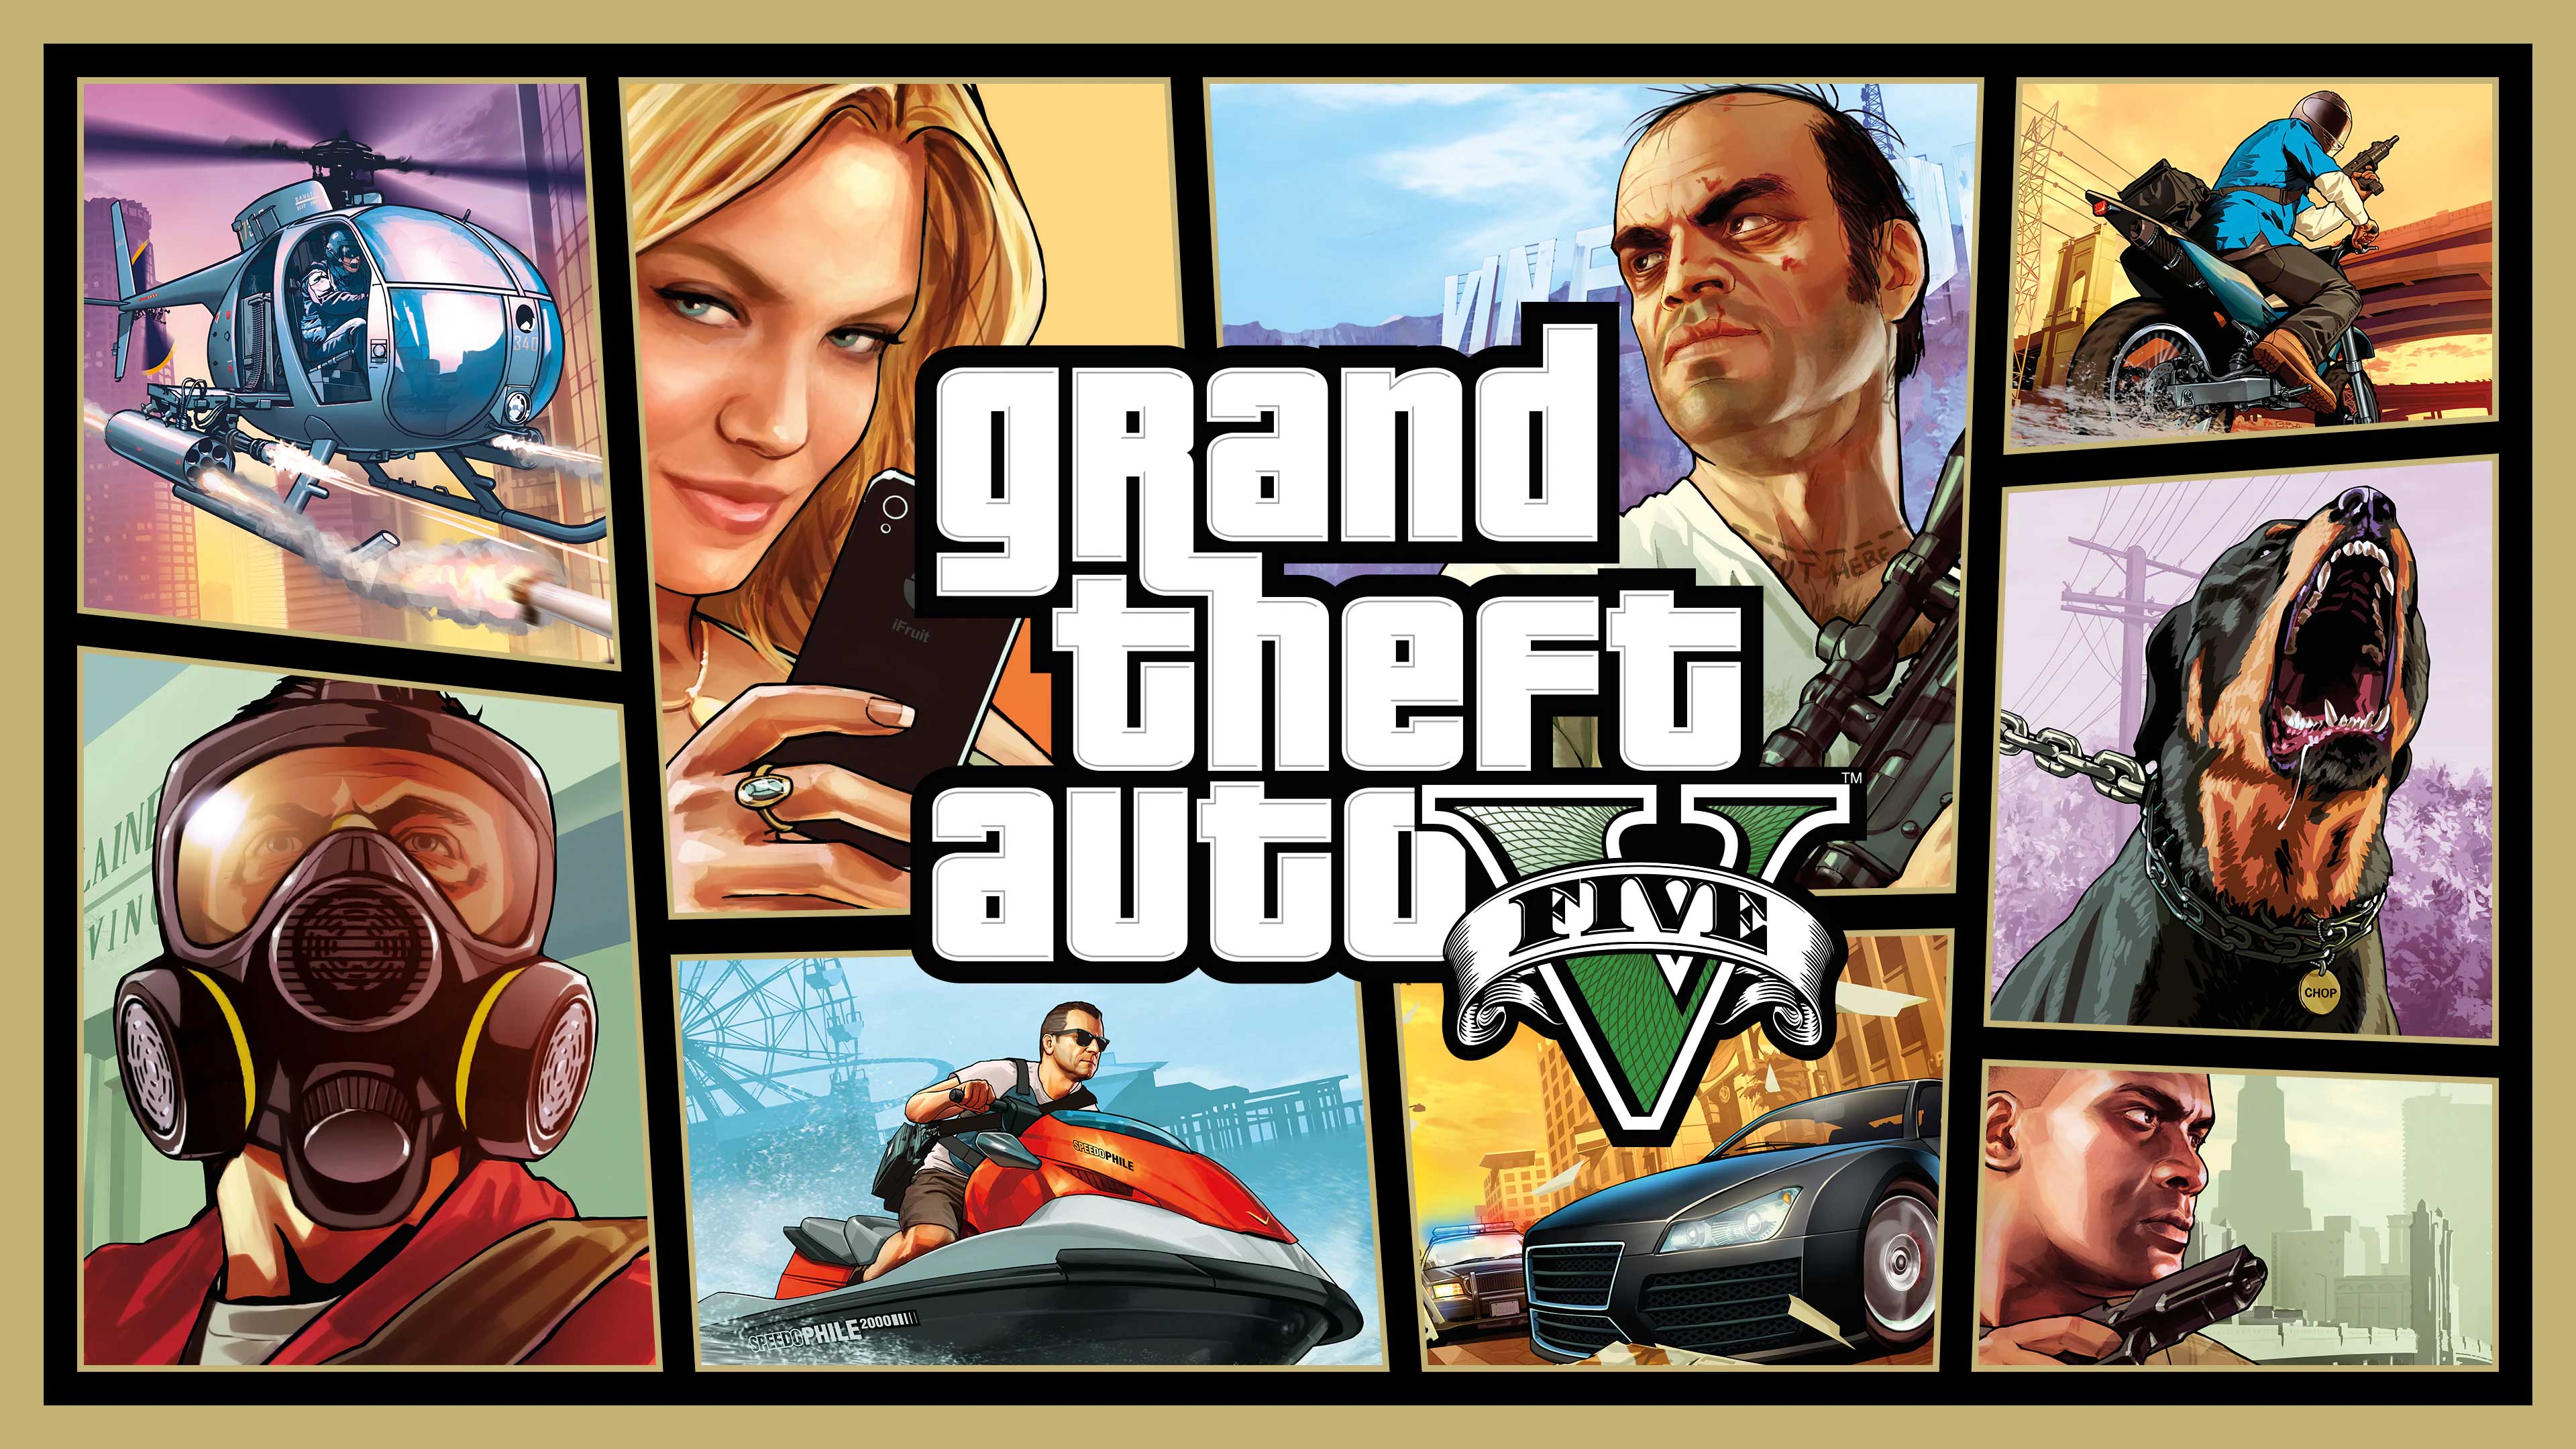 Grand Theft Auto V, A Gamers Dreams, agamersdreams.com